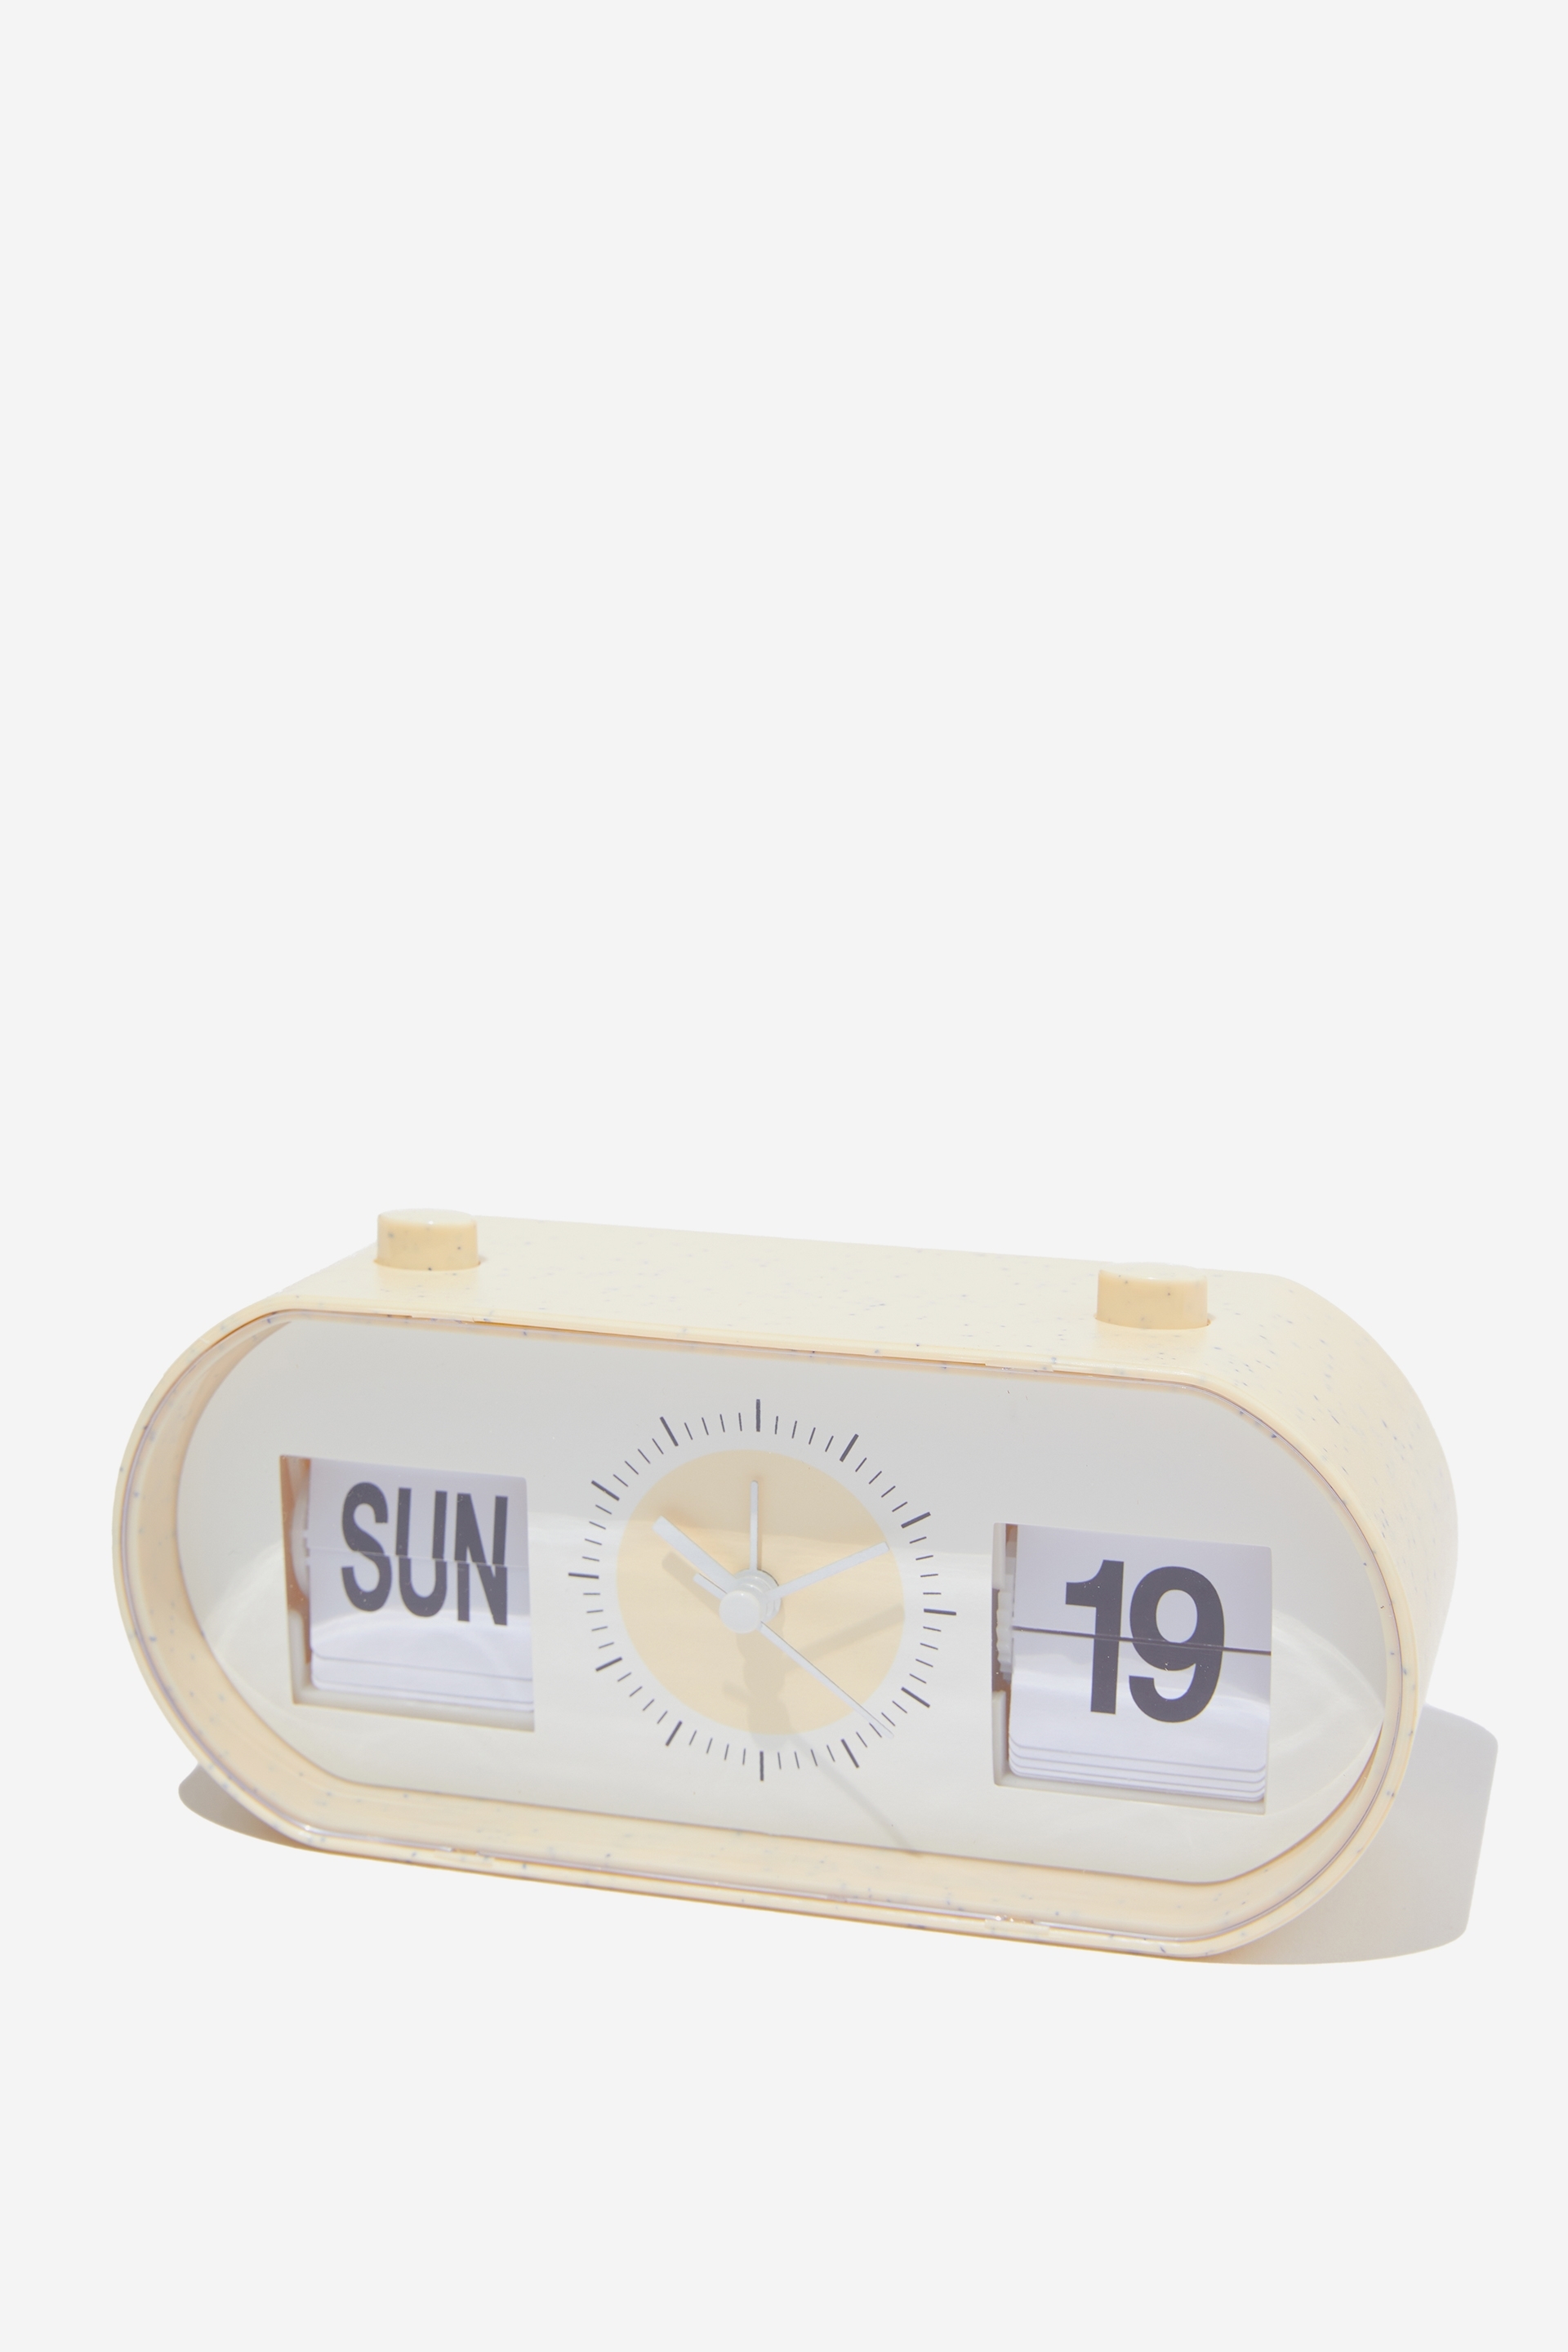 Typo - Flip Clock V2.0 - Ecru speckle